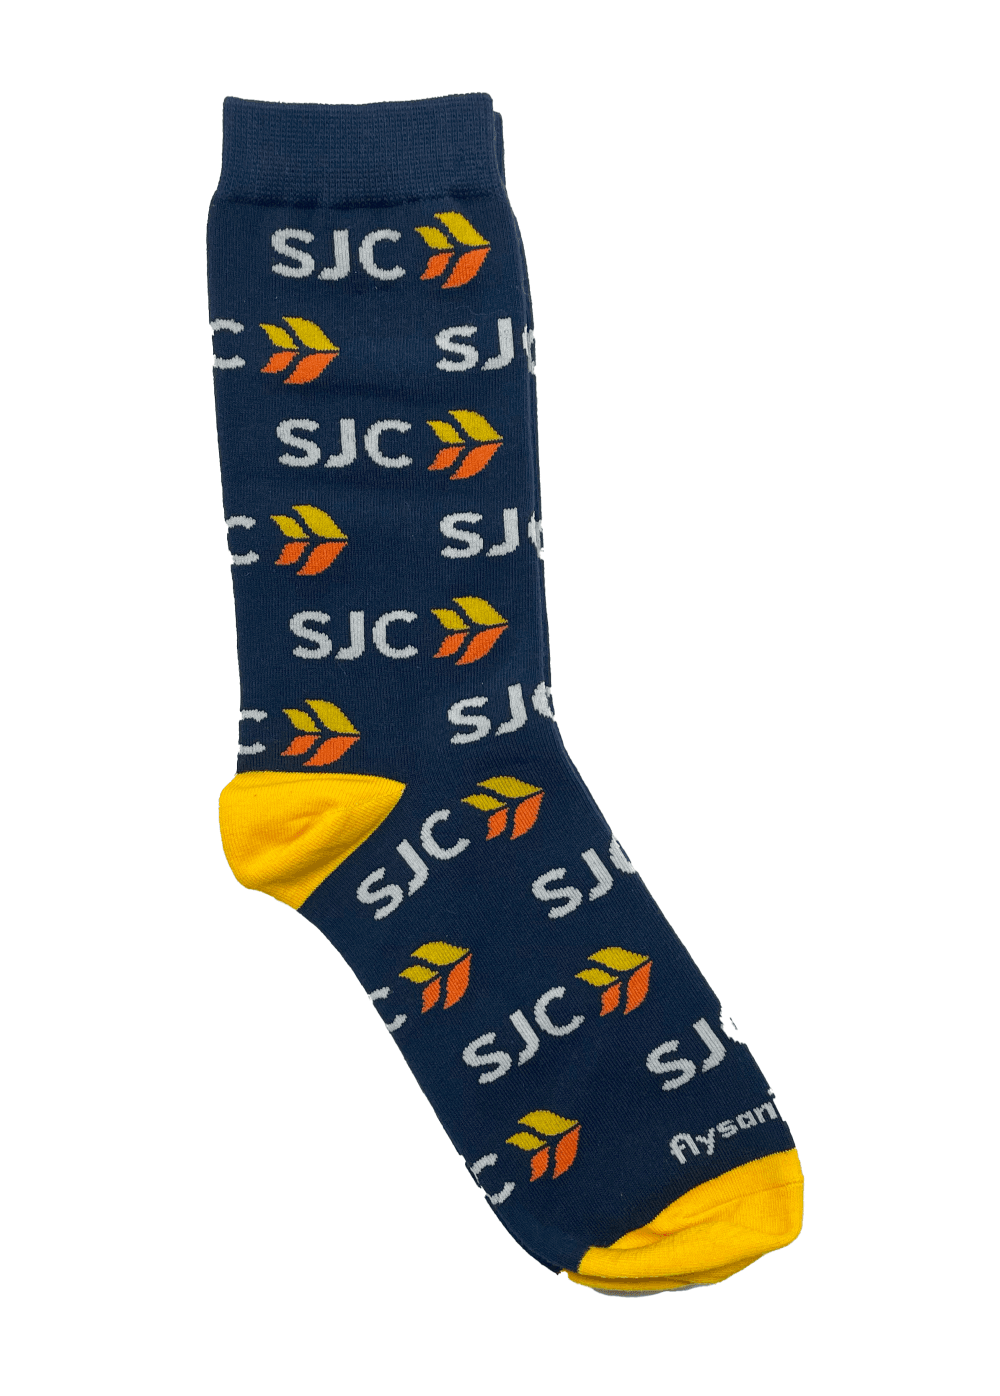 "SJC" Dress Sock - One Size